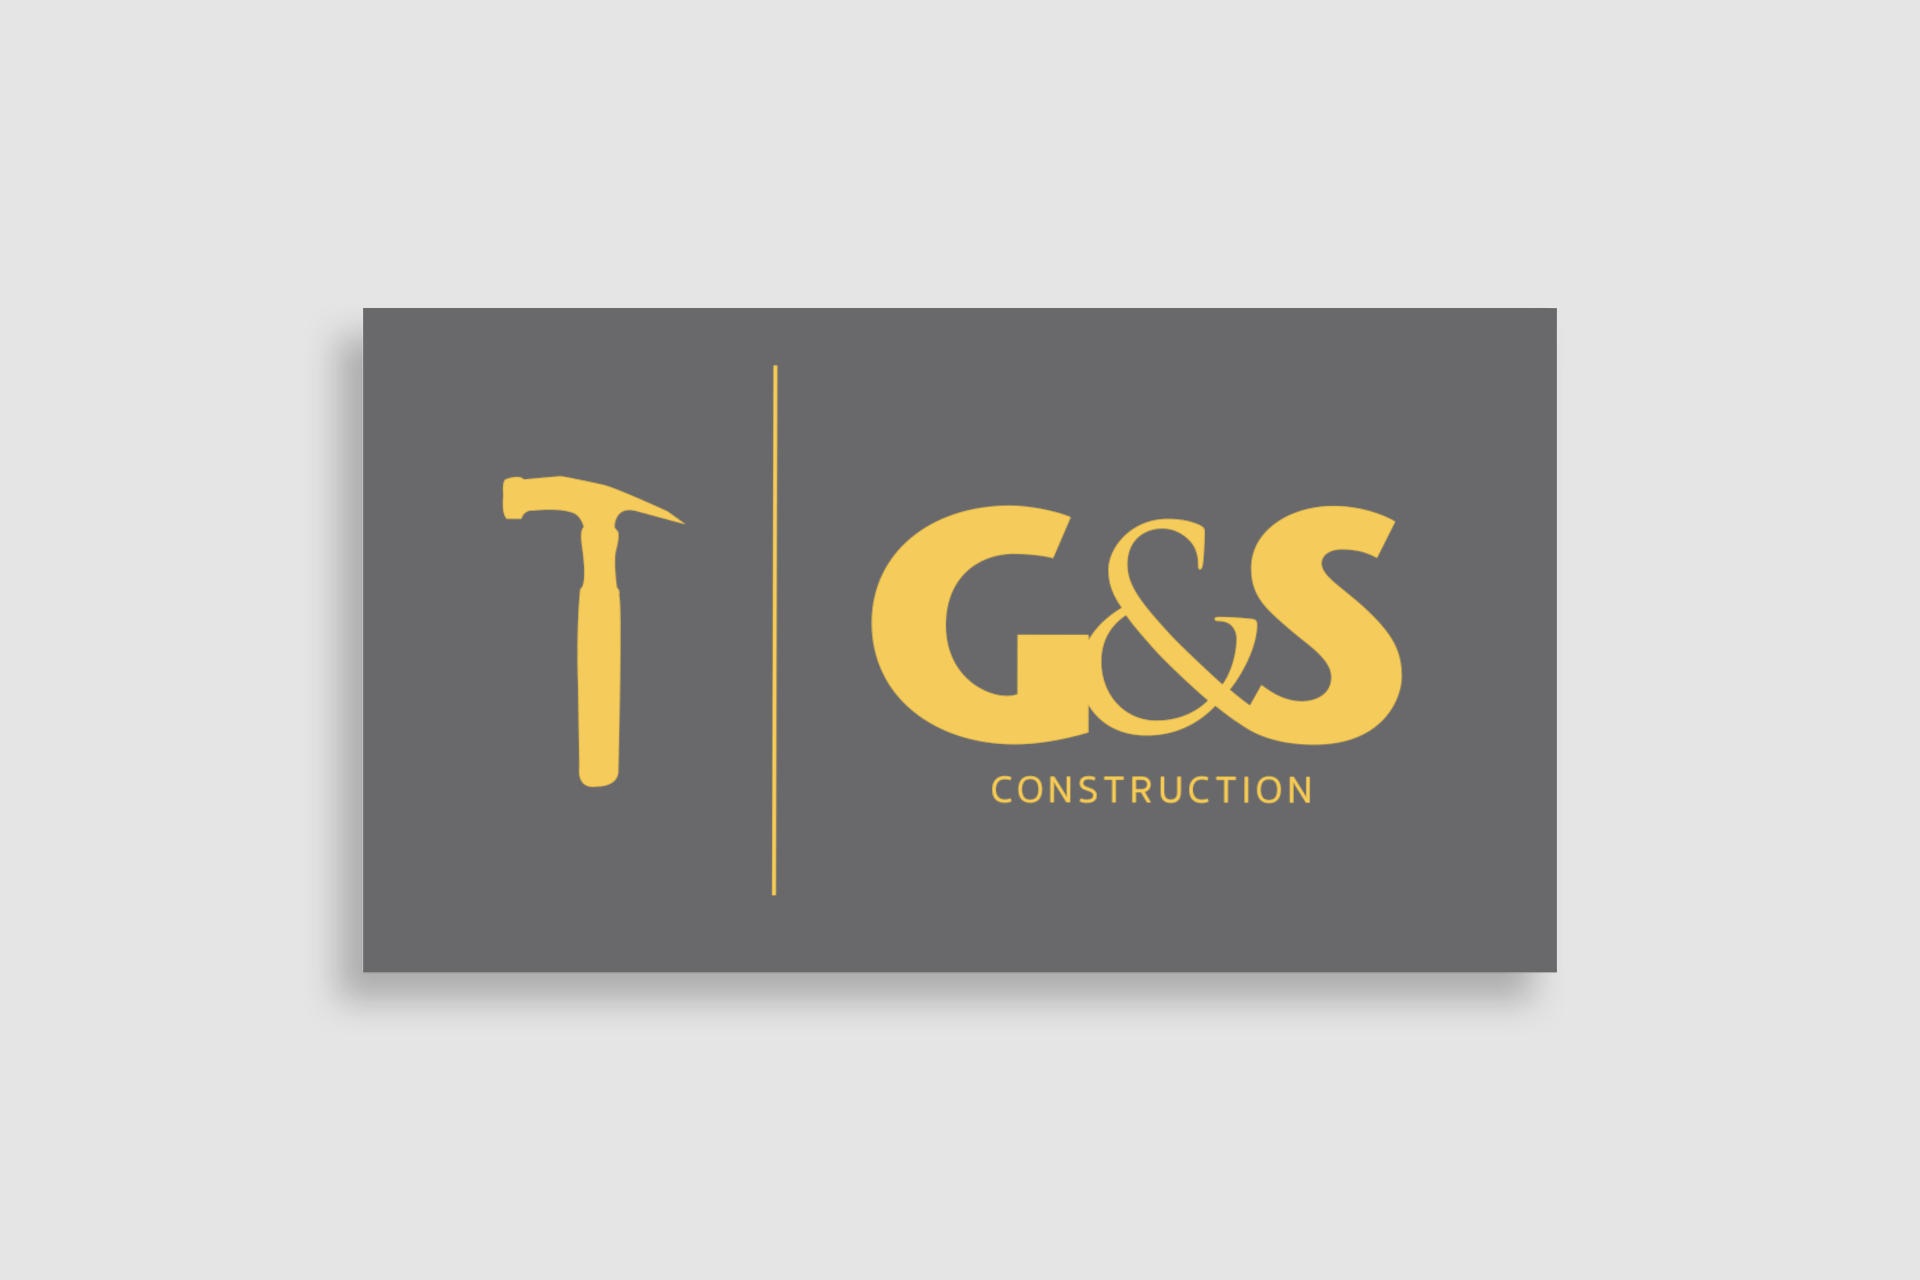 1-G&S Logo.png